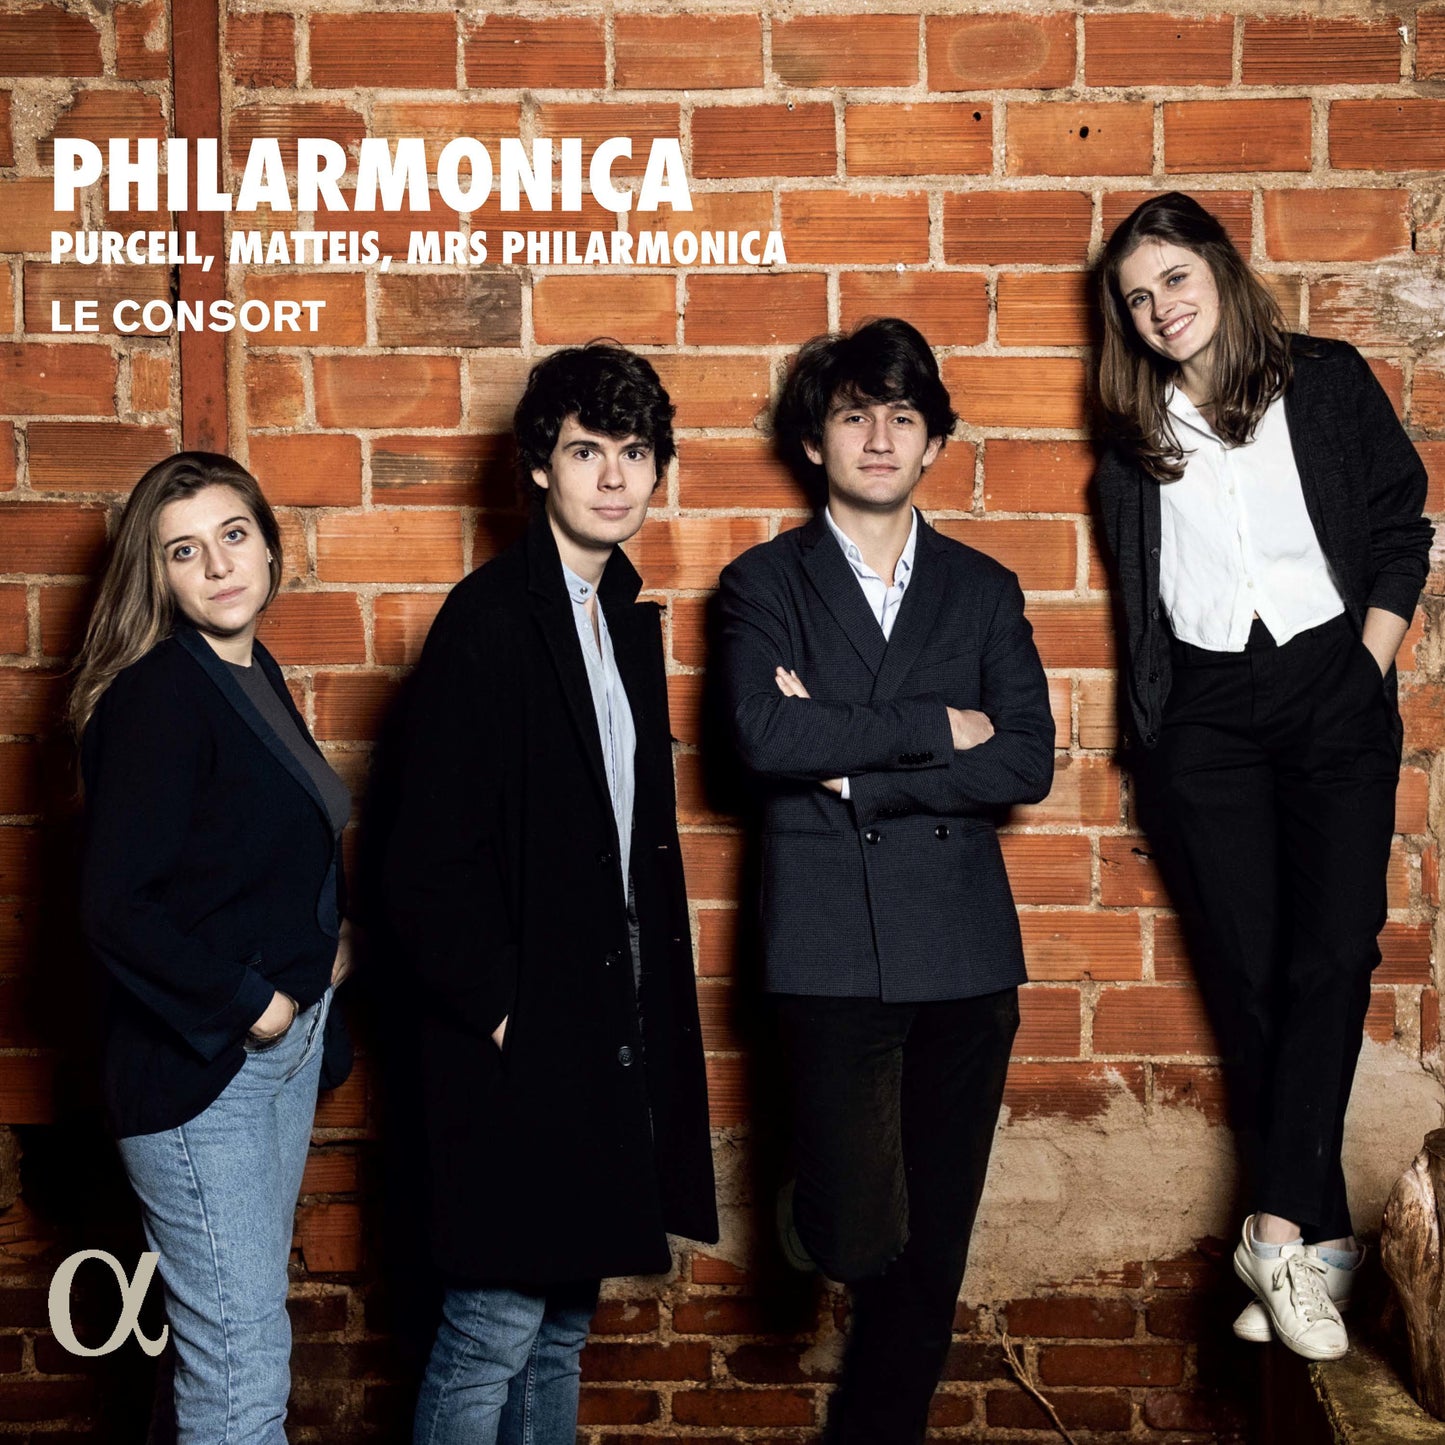 Matteis, Mrs. Philarmonica & Purcell: Philarmonica